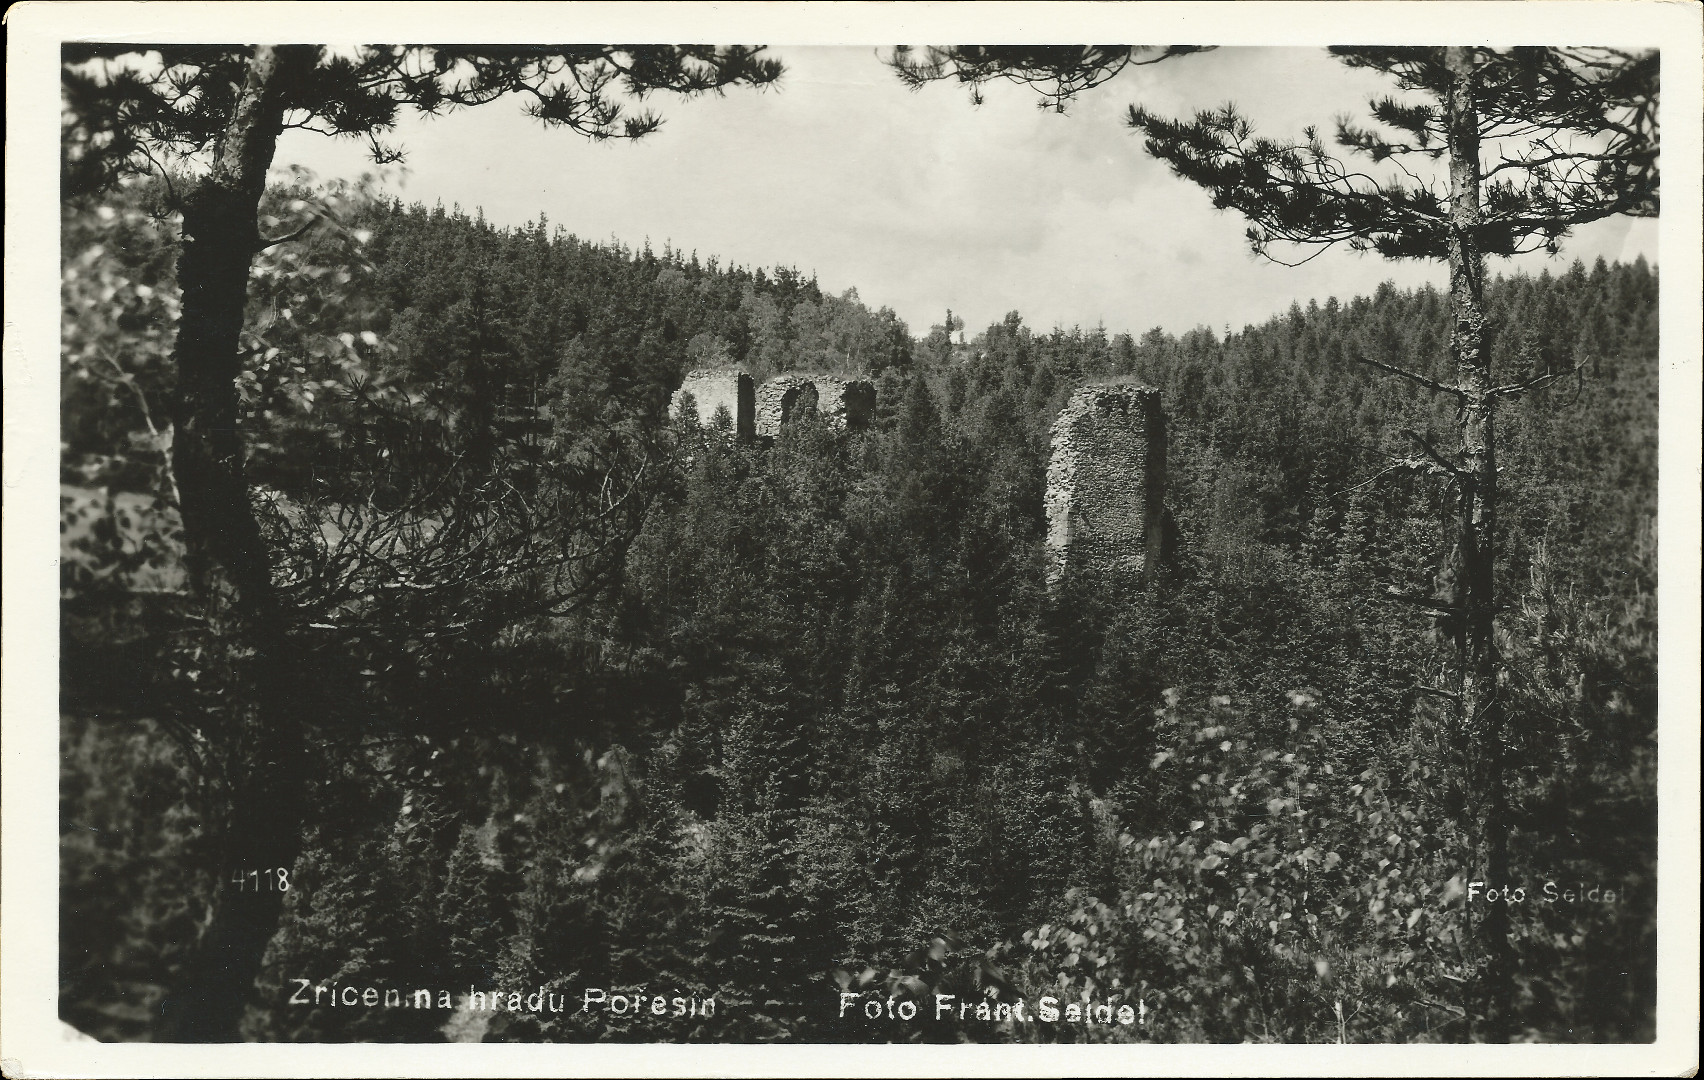 Fotografie byla pozena pes dol eky Male. Je opatena popiskami: Zcenina
  hradu Poen a Foto Frant. Seidel